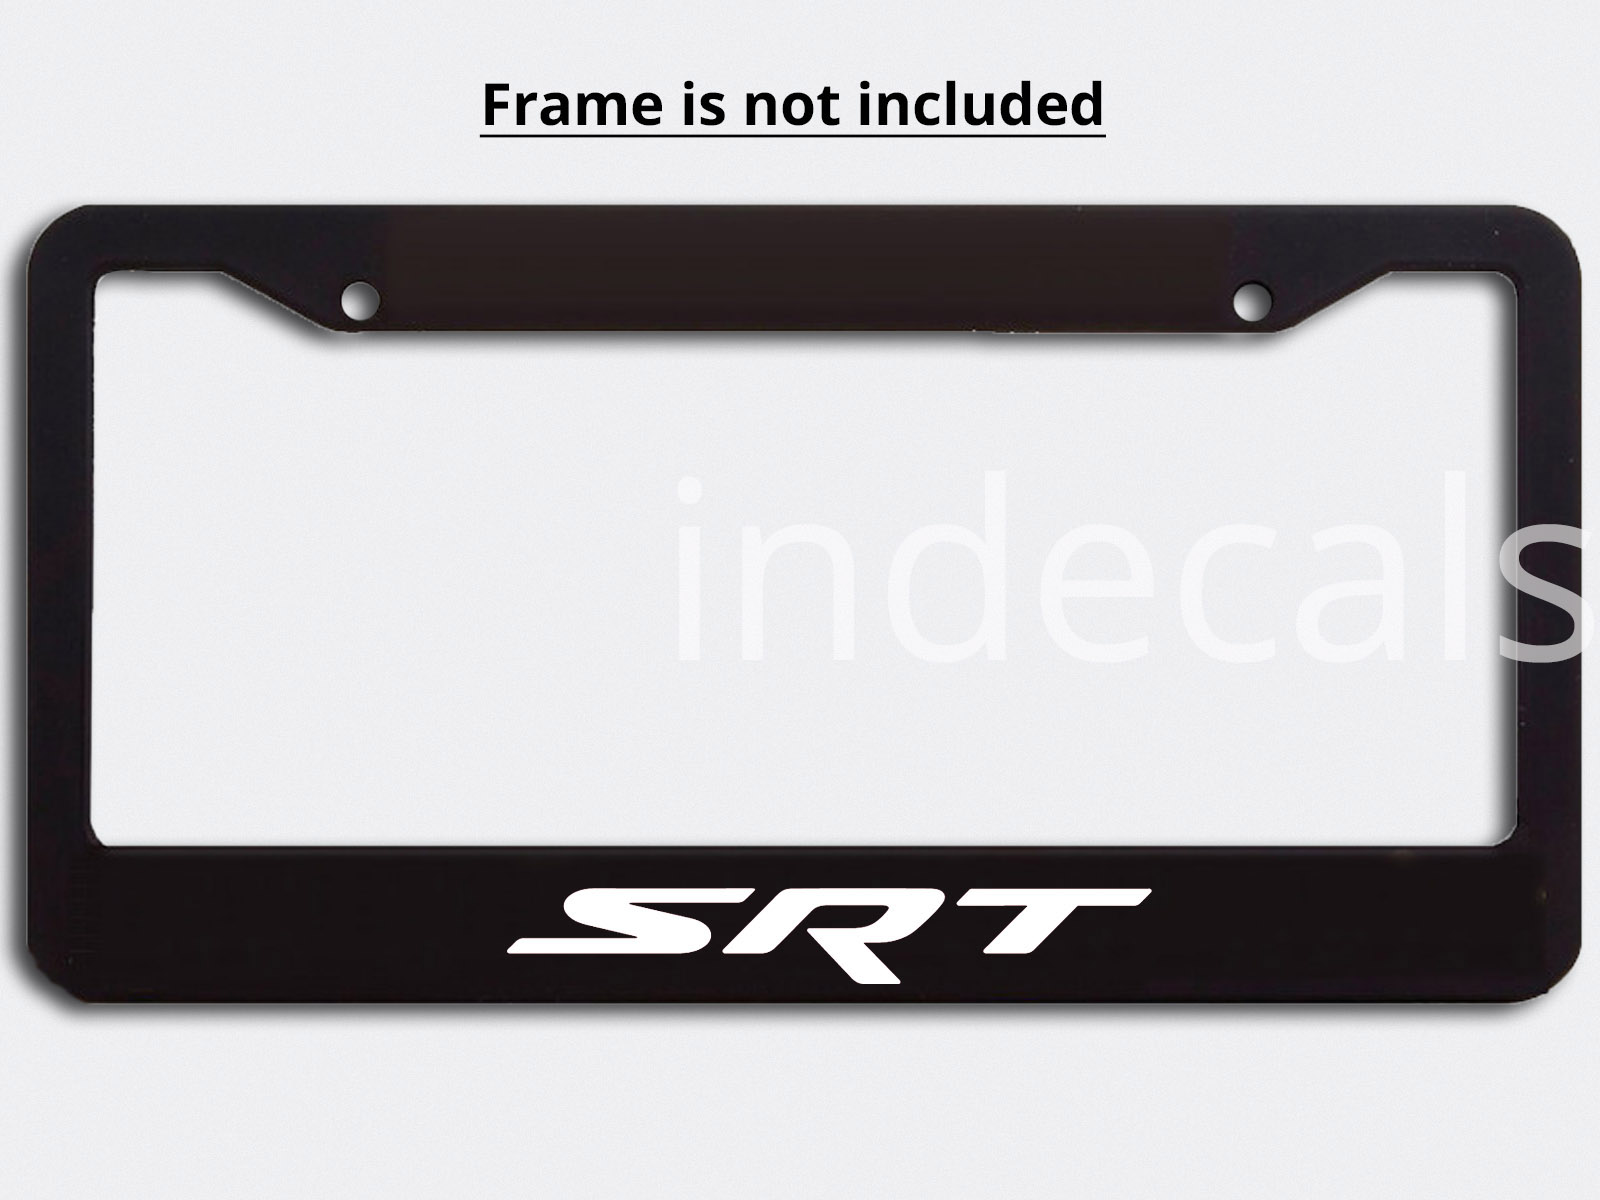 3 x Dodge SRT Stickers for License Plate Frame - White